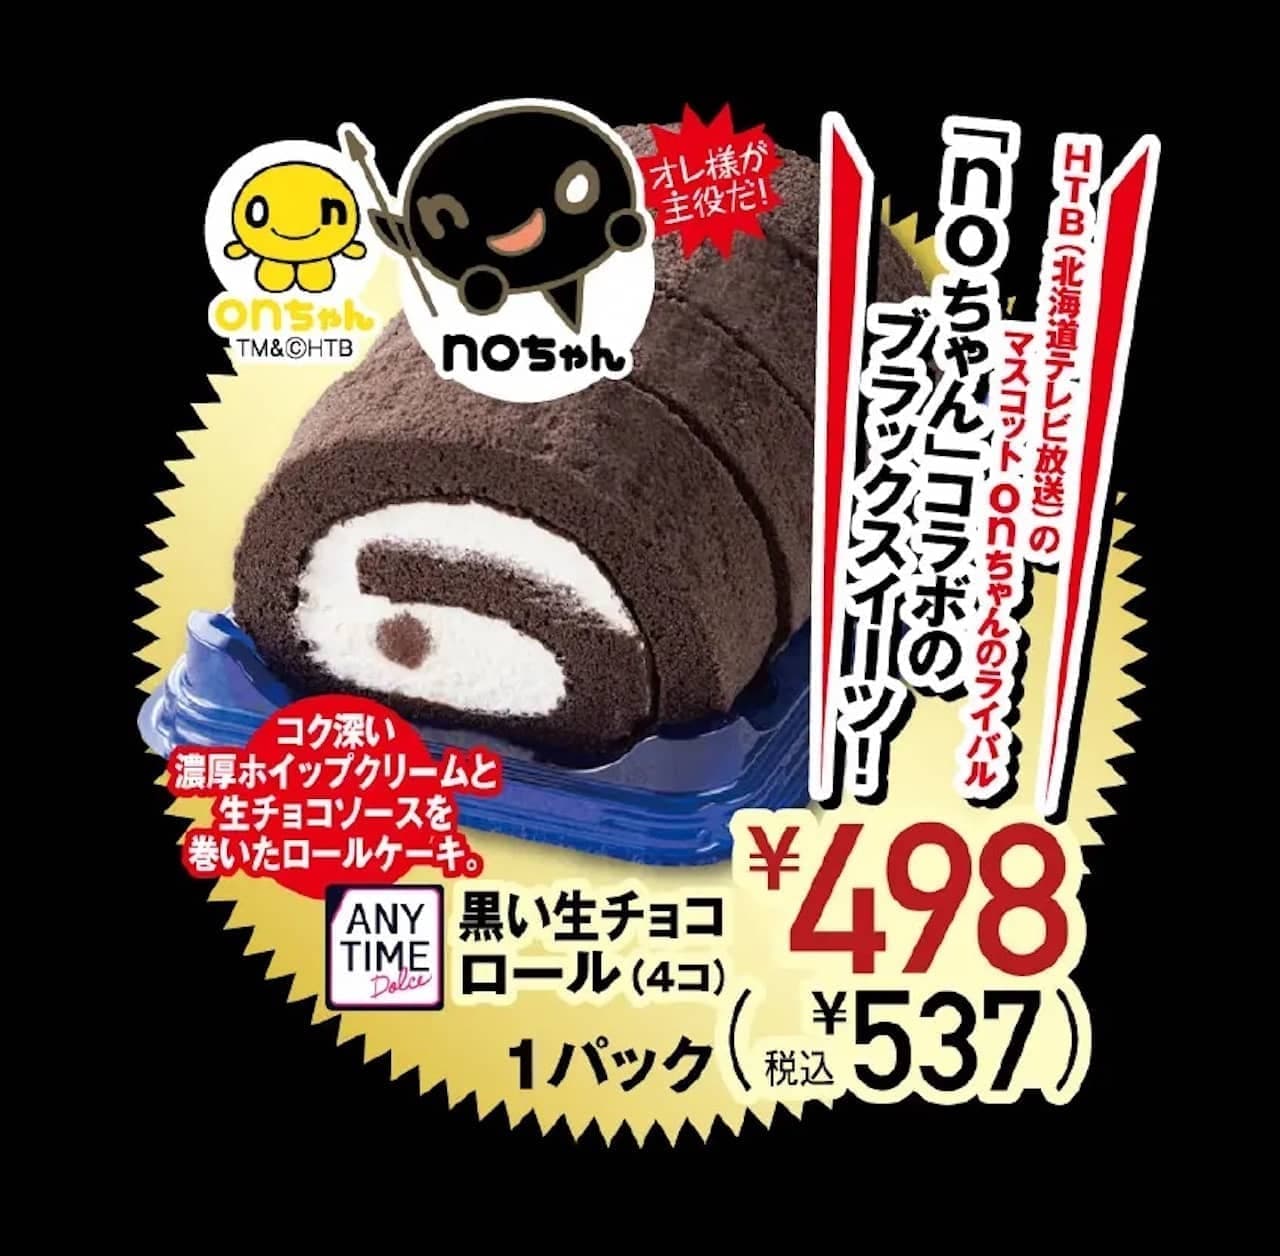 NO-CHAN Collaboration Sweets Ito-Yokado "Black Raw Chocolate Roll